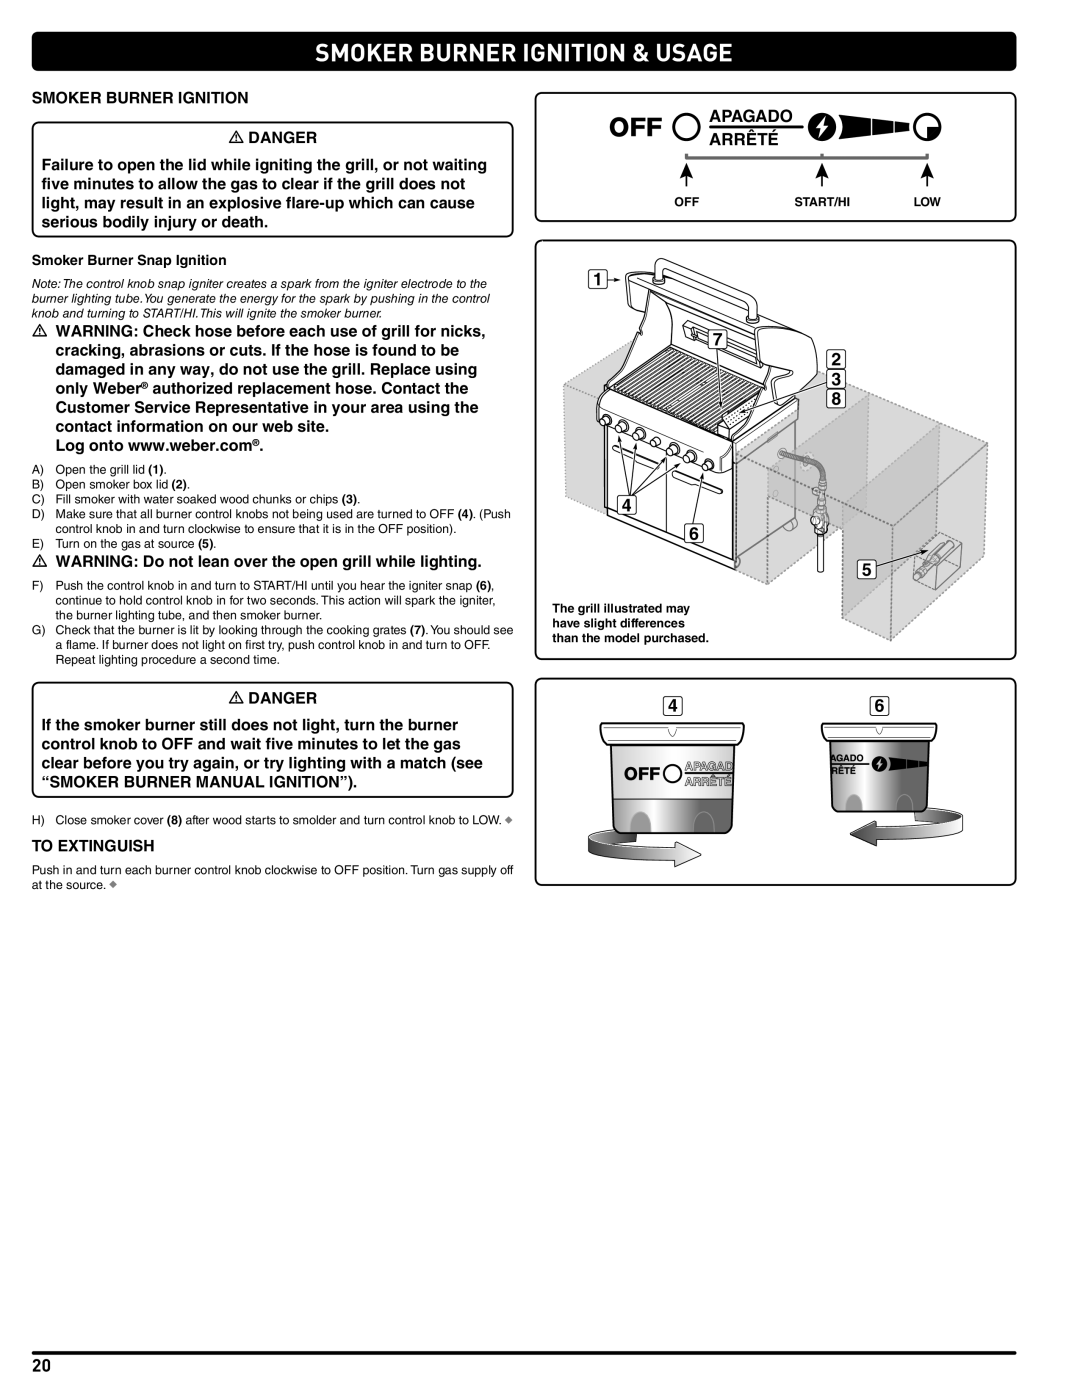 Weber 56576 manual Smoker Burner Ignition & Usage, Apagado Arrêté, Smoker Burner Snap Ignition 